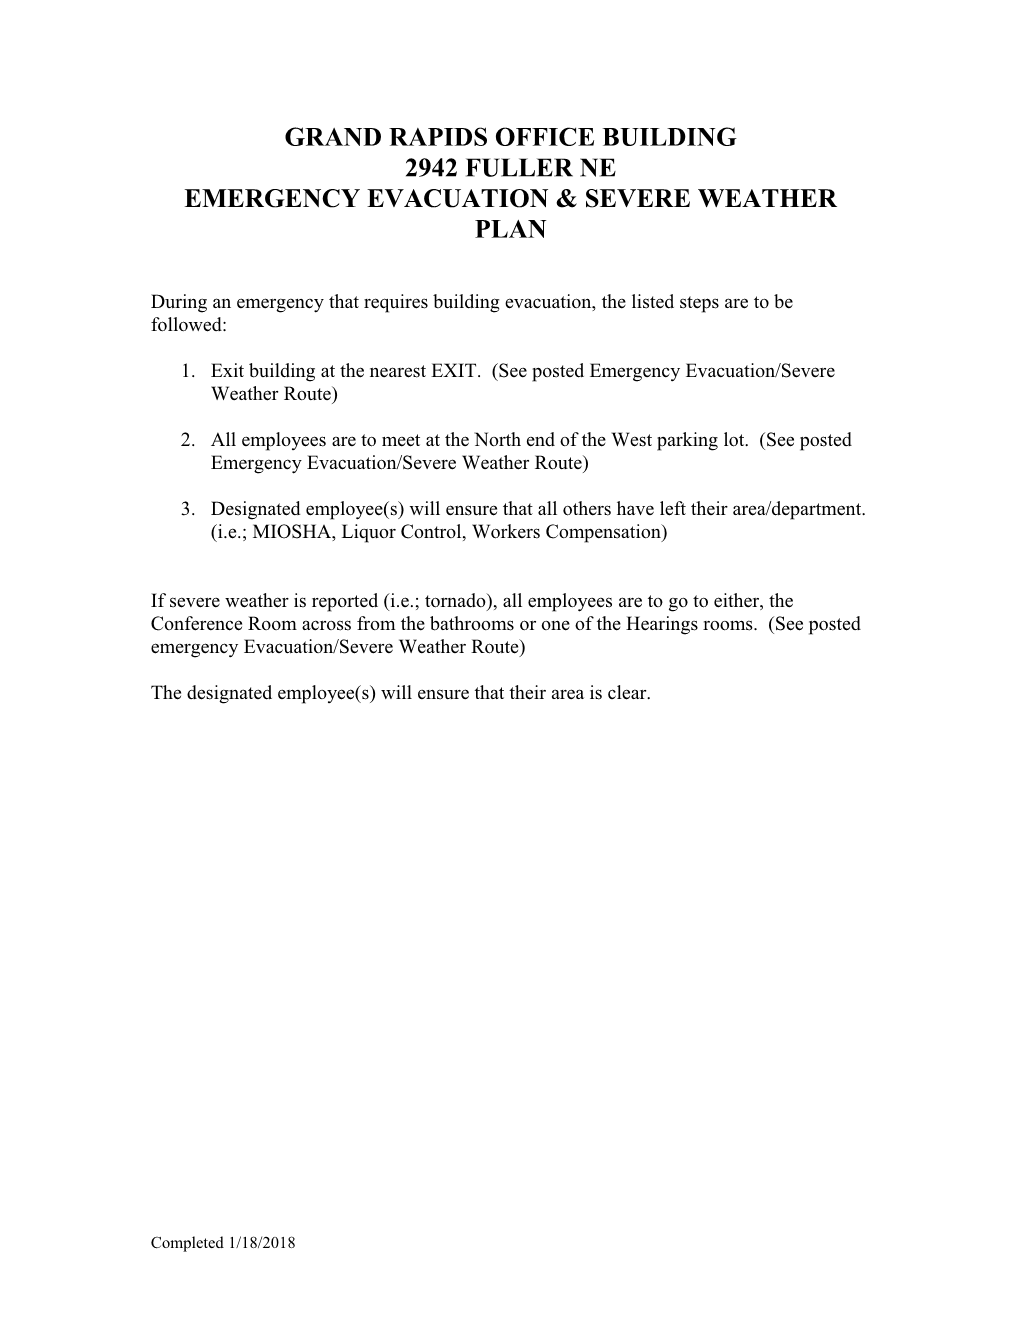 Emergency Evacuation & Severe Weather Plan